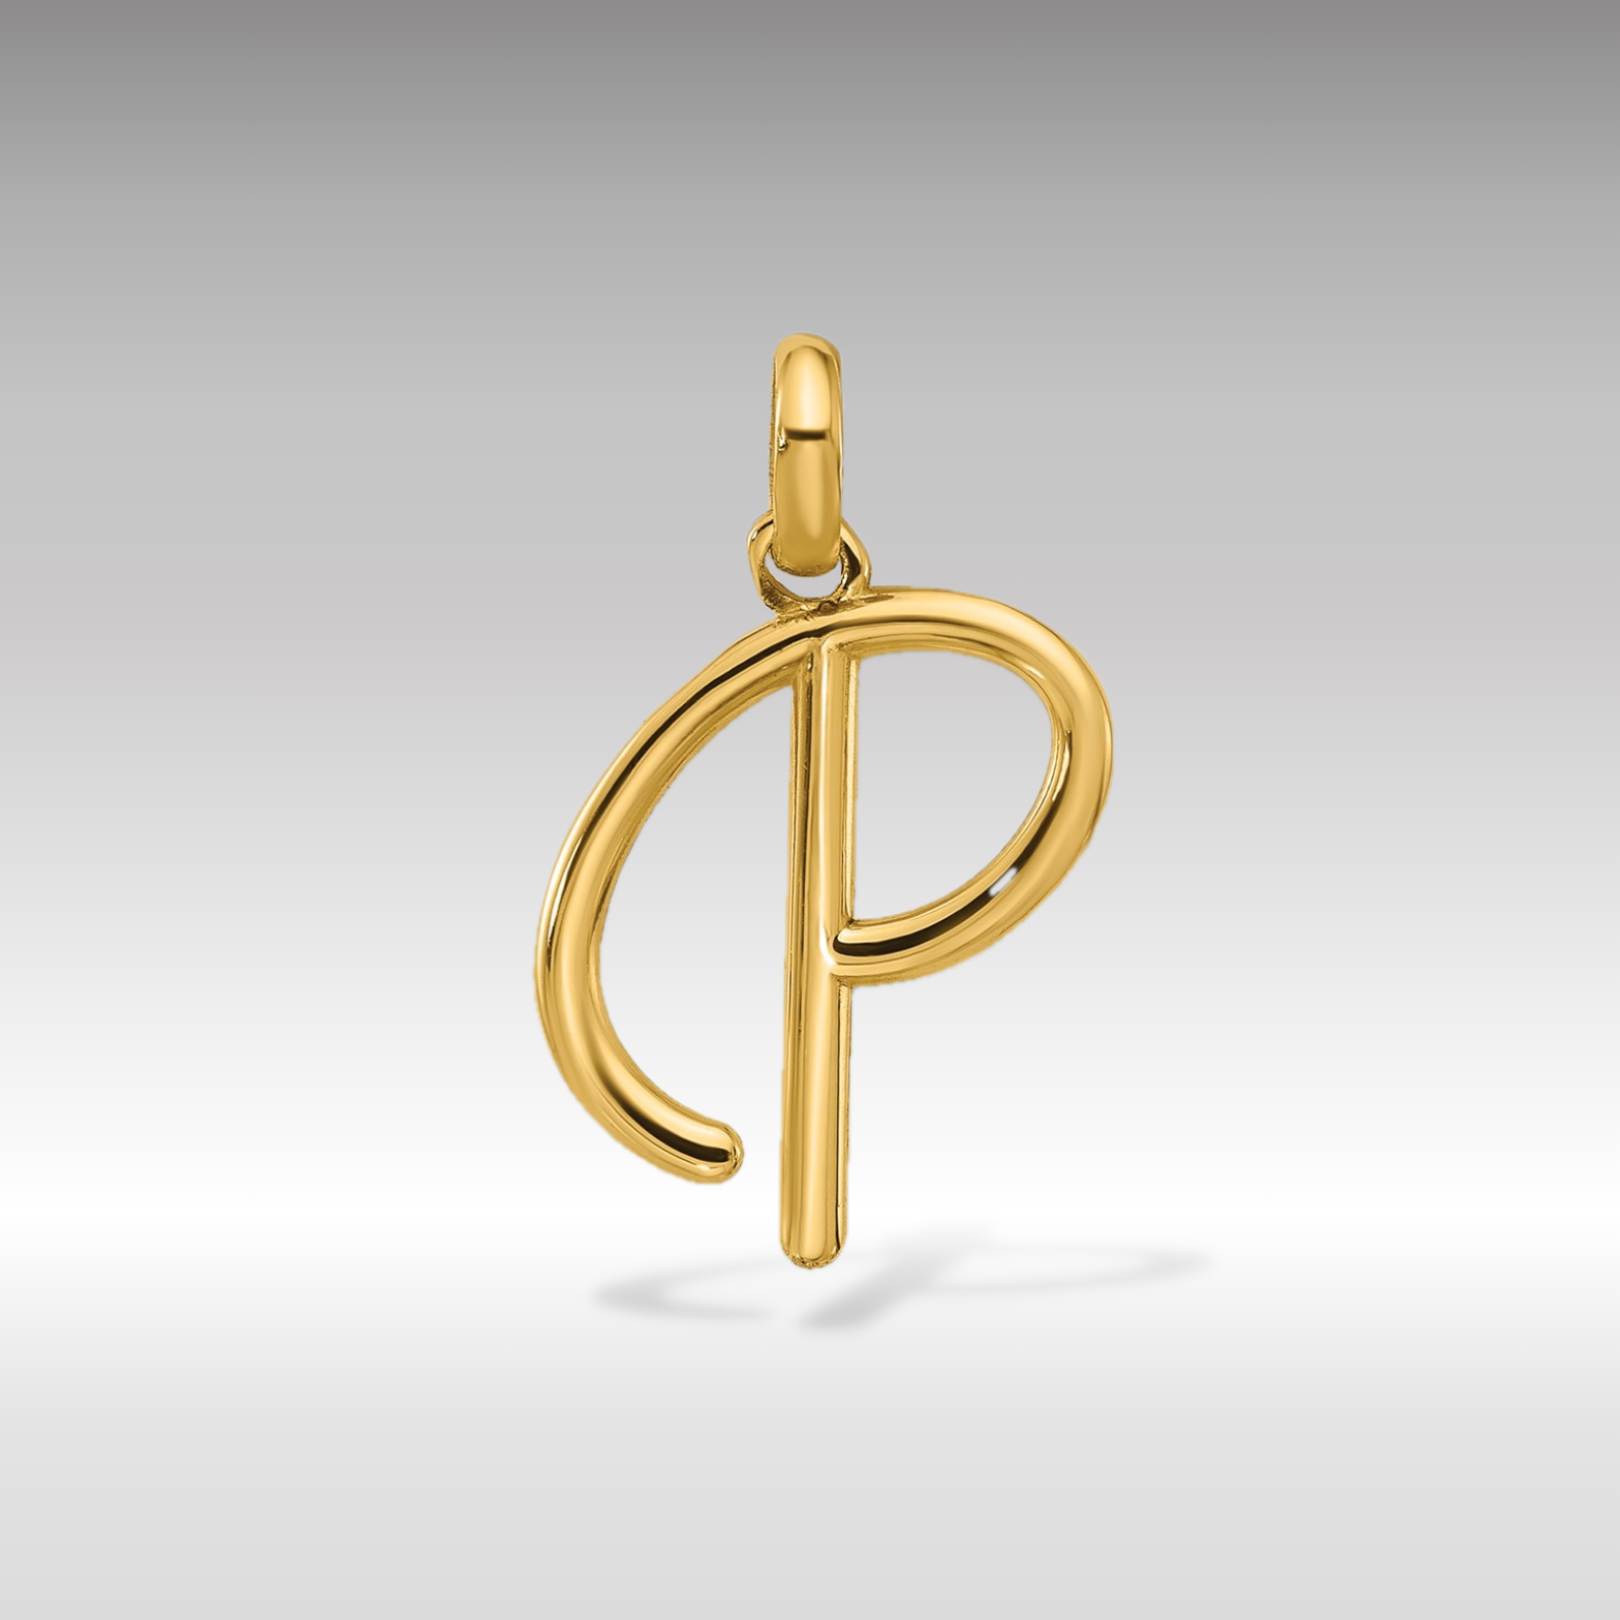 14K Gold Fancy Letter 'P' Charm Pendant - Charlie & Co. Jewelry